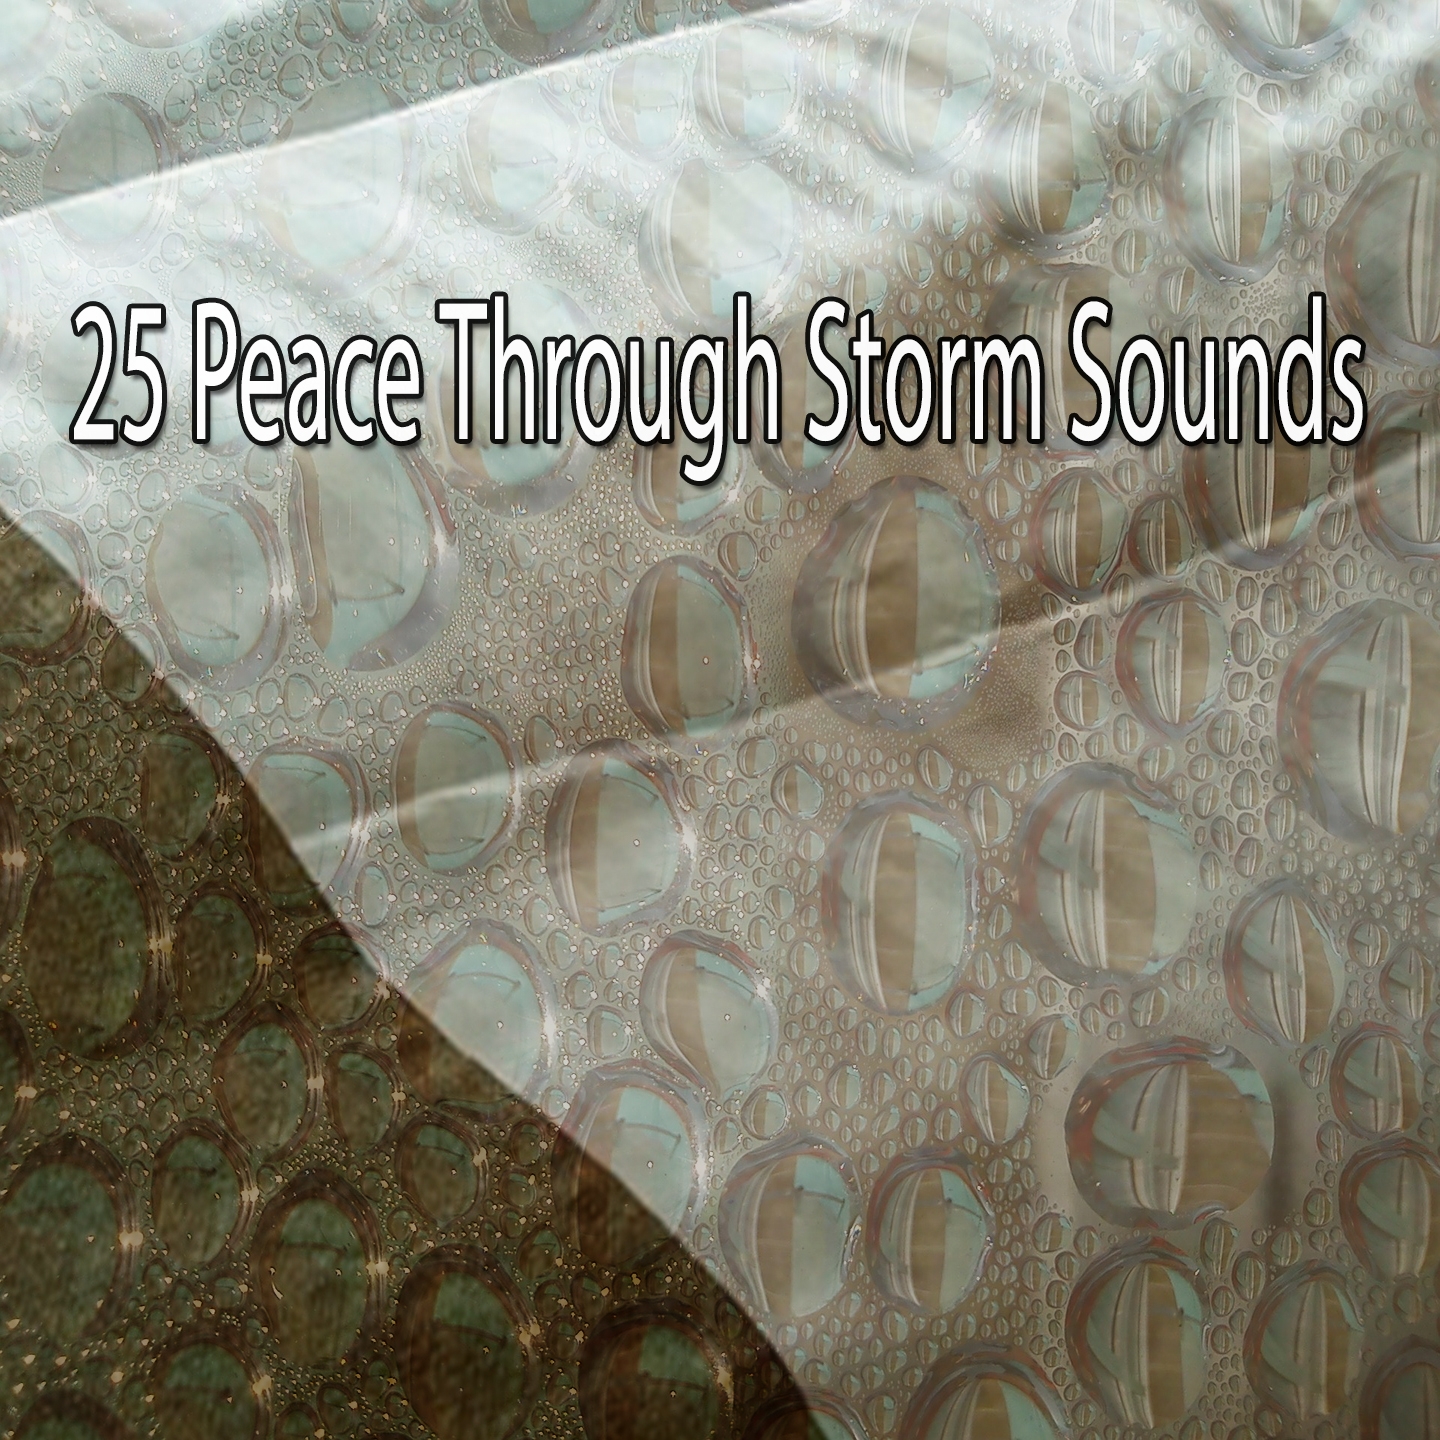 25 Peace Through Storm Sounds